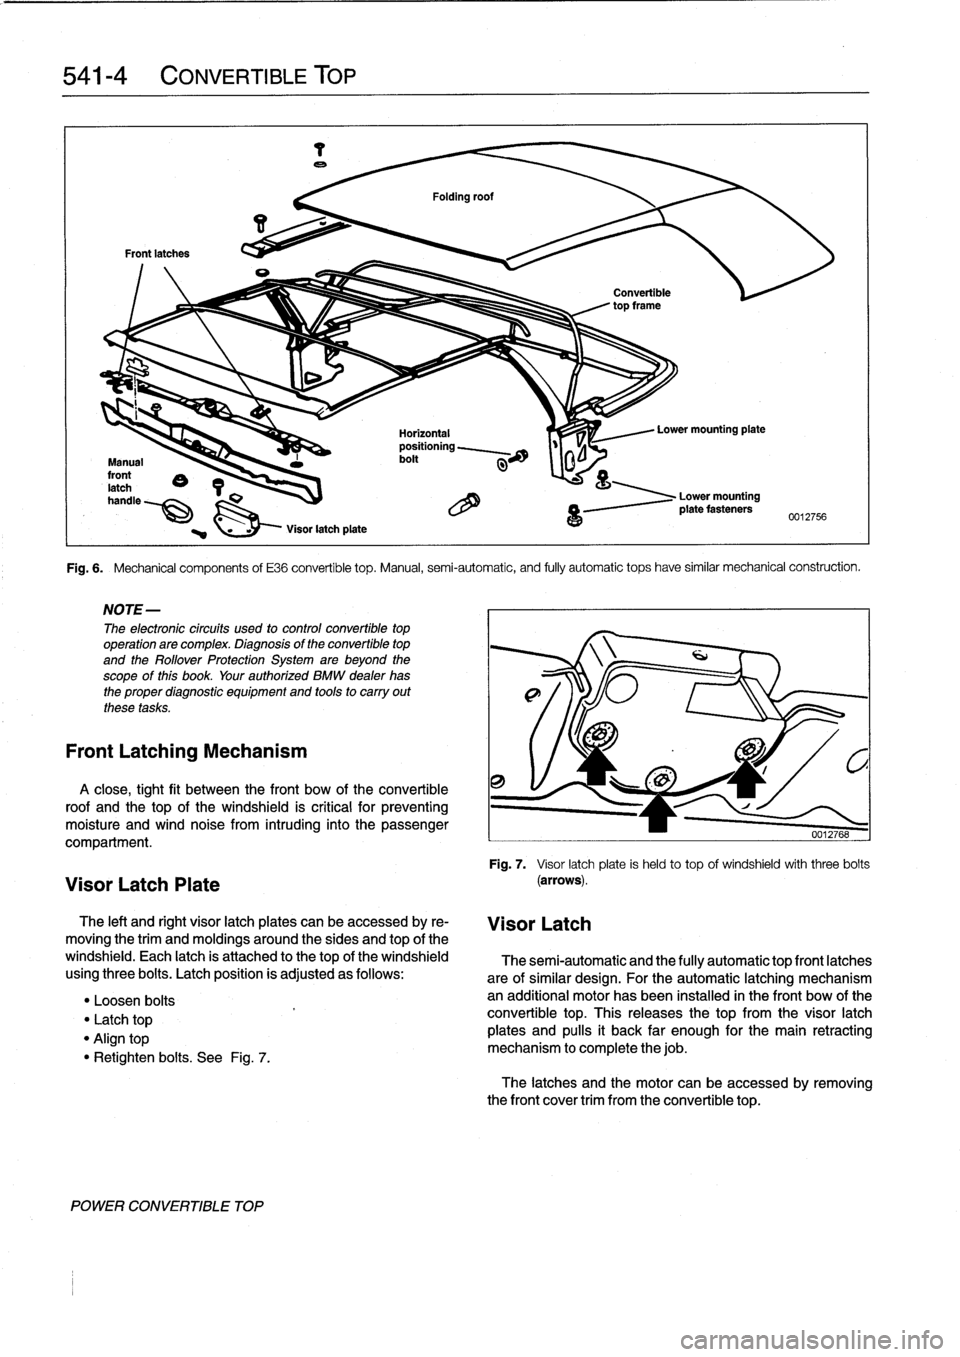 BMW 318i 1995 E36 Workshop Manual 
541-
4

	

CONVERTIBLE
TOP

Folding
roof

Frontlatches

Convertible
topframe

i

Lower
mounting
pata
Horizontal
positioning
~~-
bolt
Manual
front
8
e
latch

	

1
handle

~

	

O

Visor
latchplata

Fi